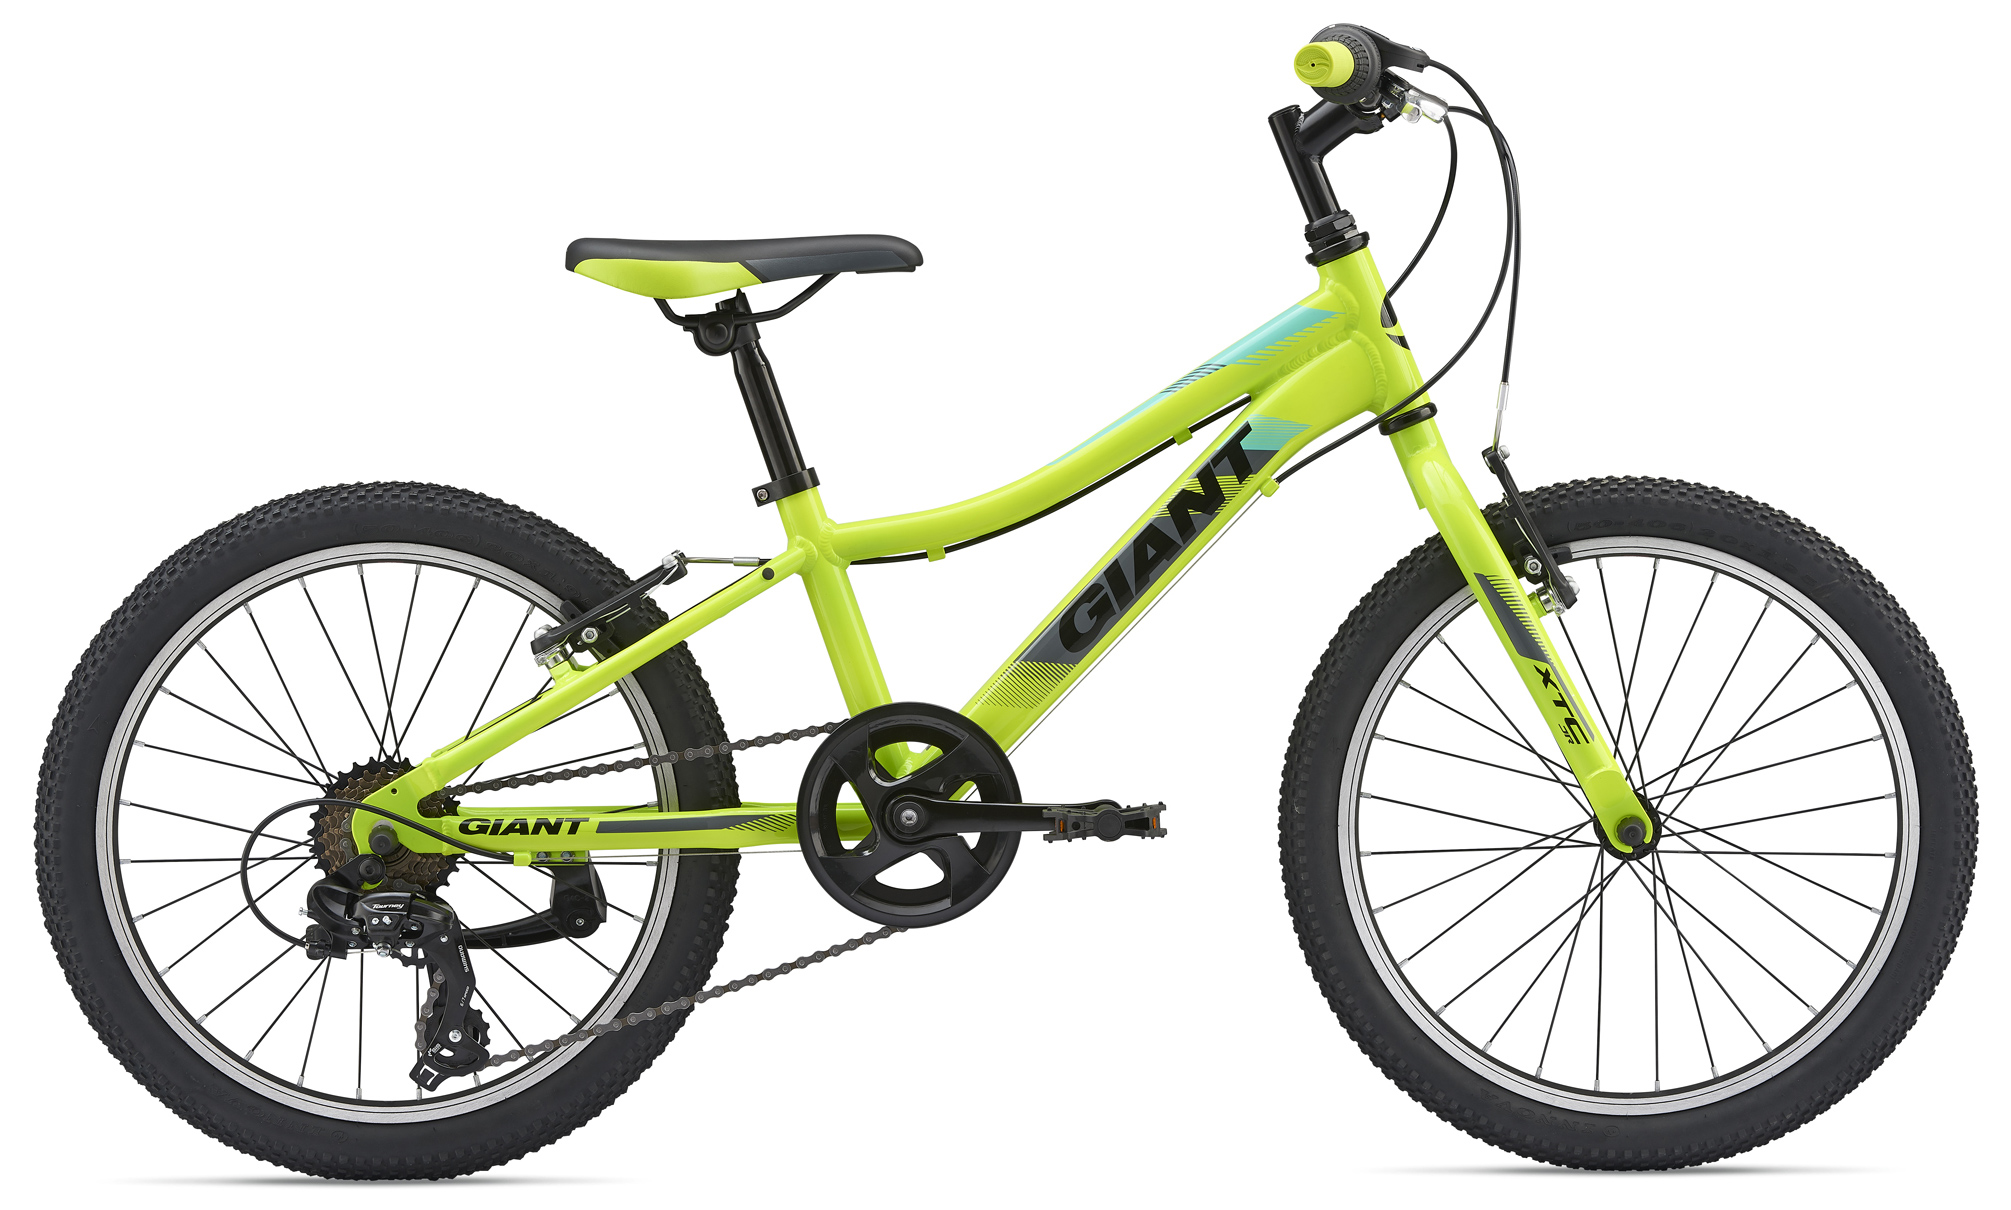  Отзывы о Детском велосипеде Giant XtC Jr 20 Lite 2019